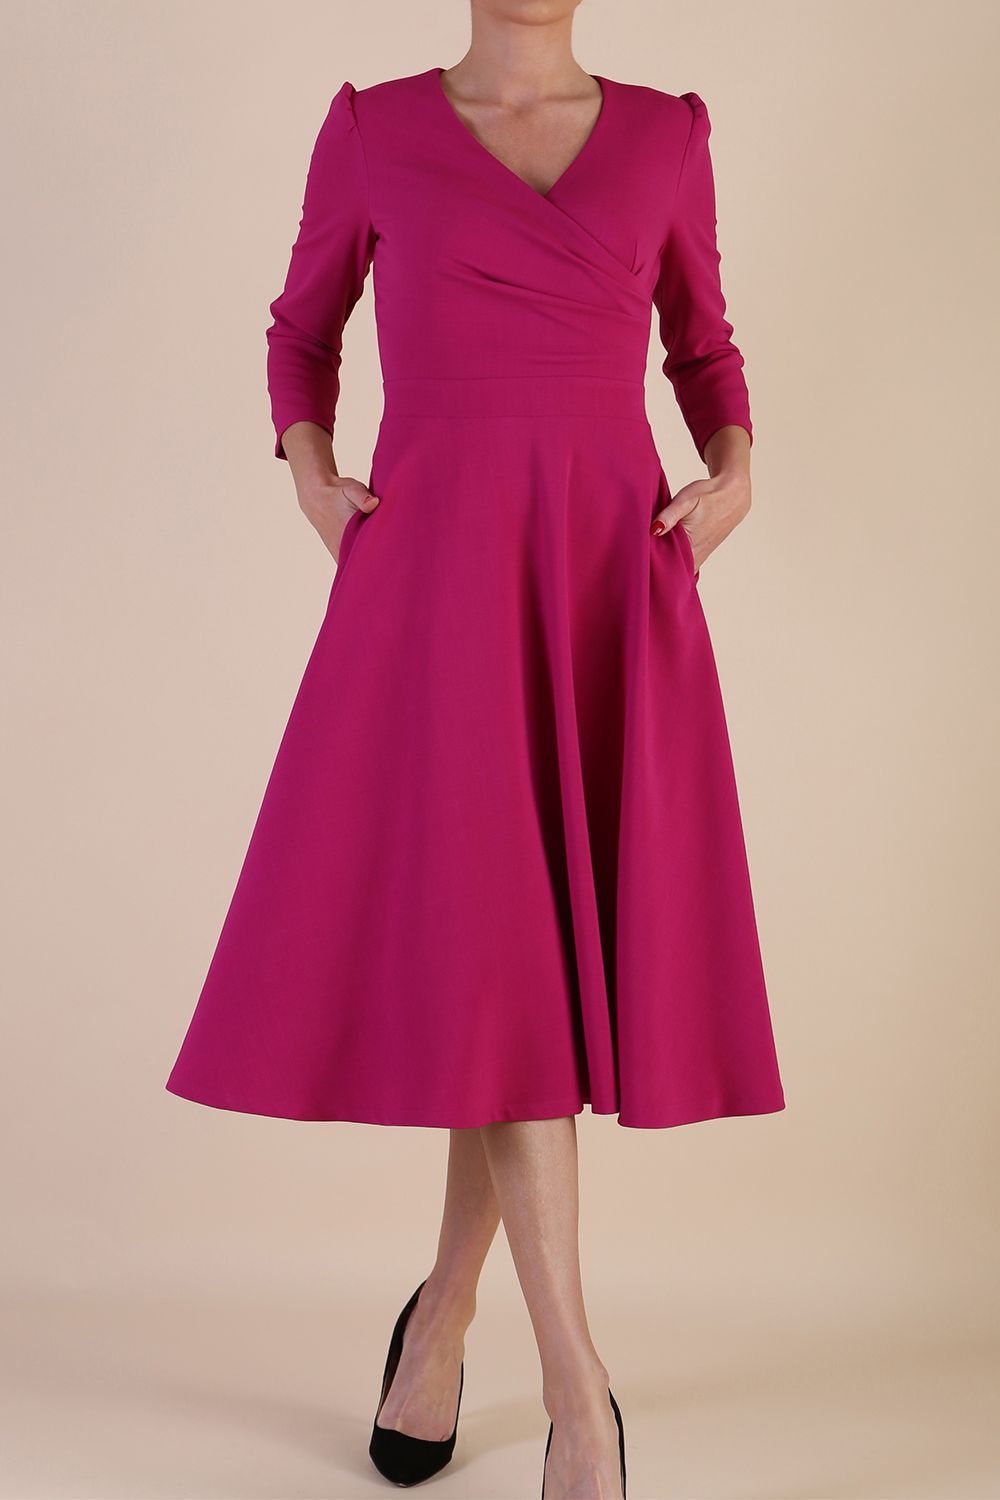 Model wearing diva catwalk Kate 3/4 Length Sleeve A-Line Swing Dress in Magenta Haze with pockets front